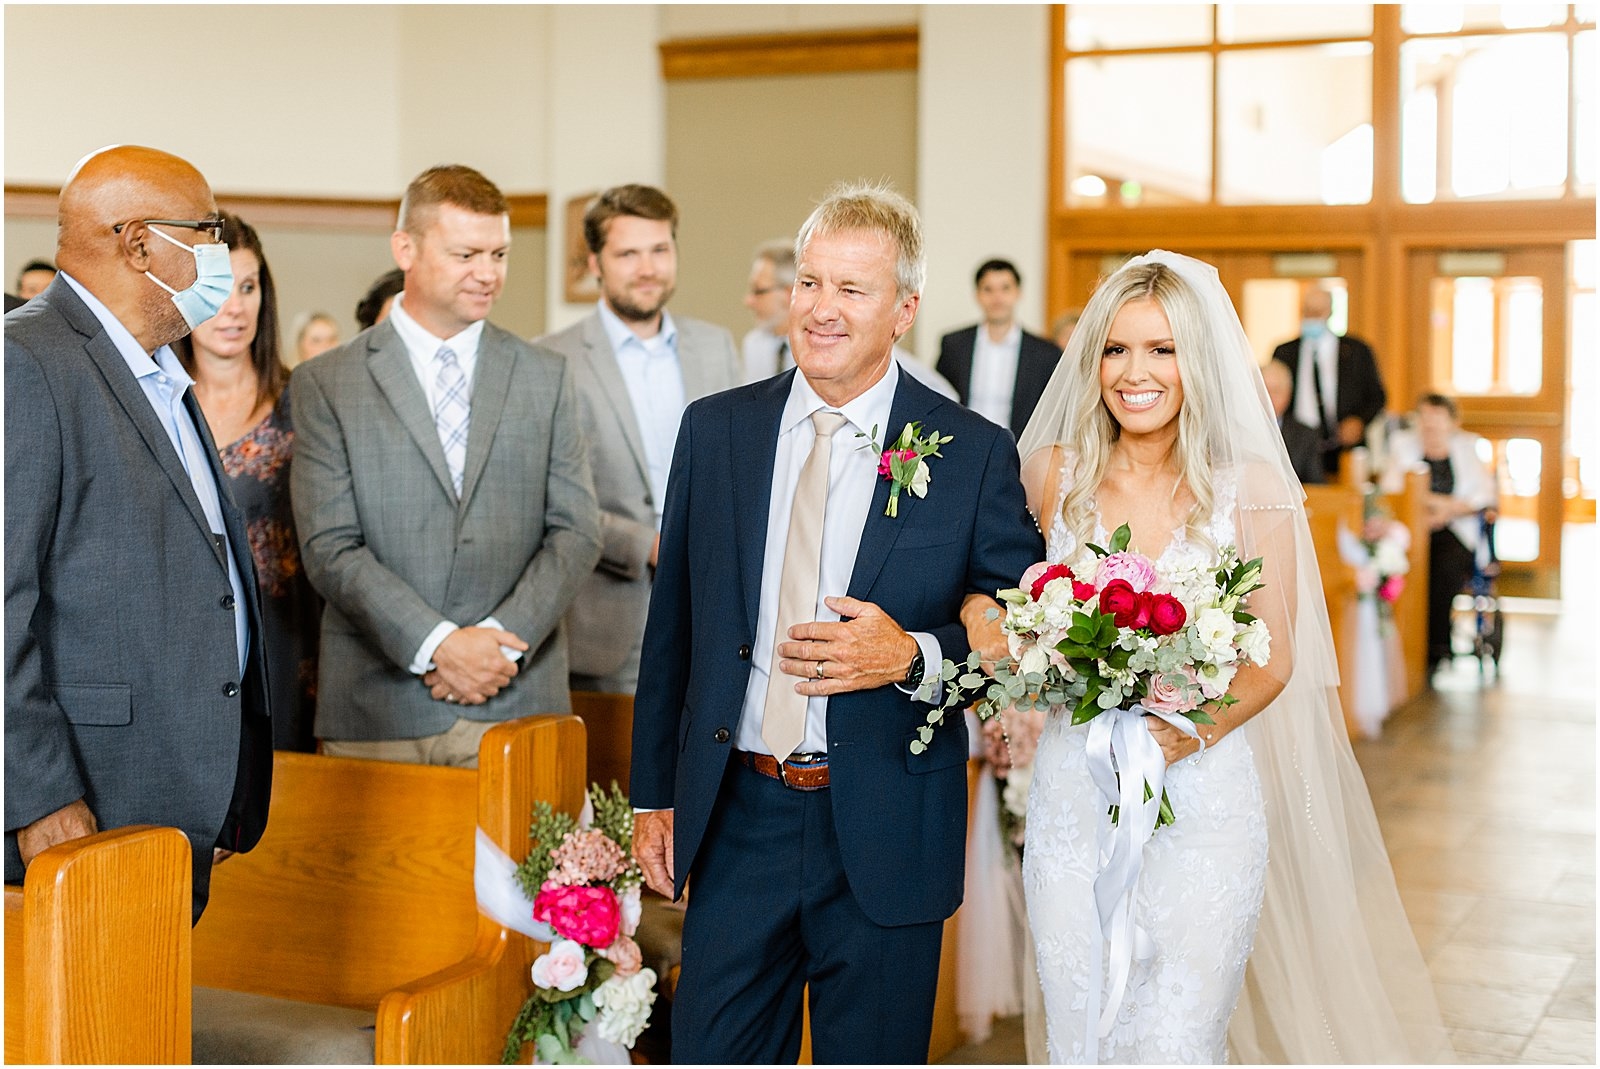 An Evansville Country Club Wedding | Madison and Christiaan | Bret and Brandie | Evansville Photographers | @bretandbrandie-0116.jpg